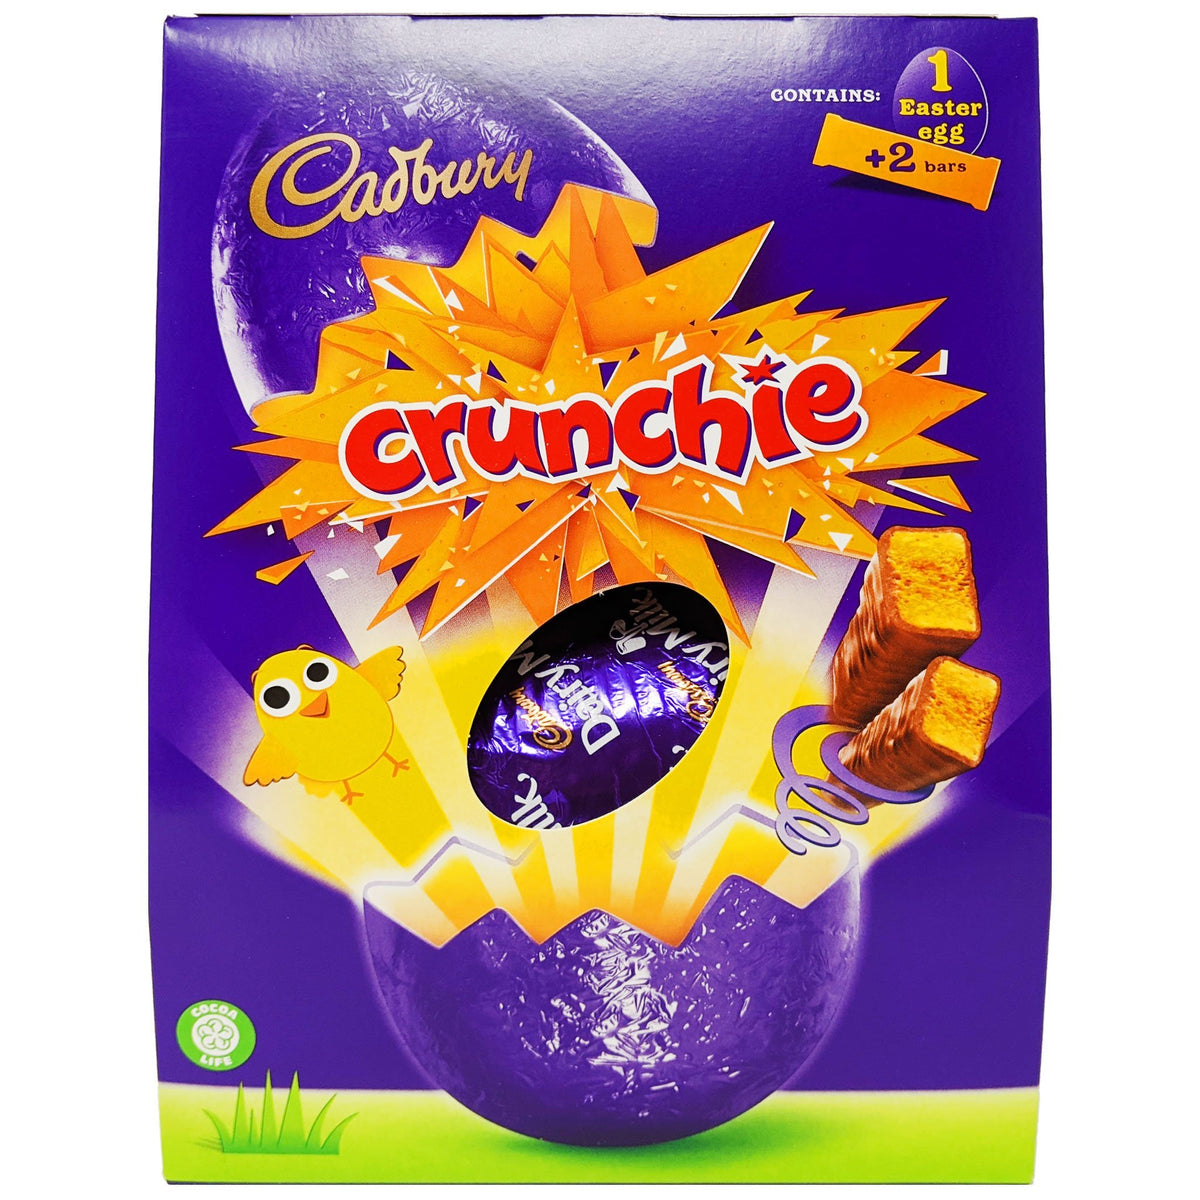 Shop Our Cadbury Crunchie Easter Egg 190g Cadbury To Find The Best Deals